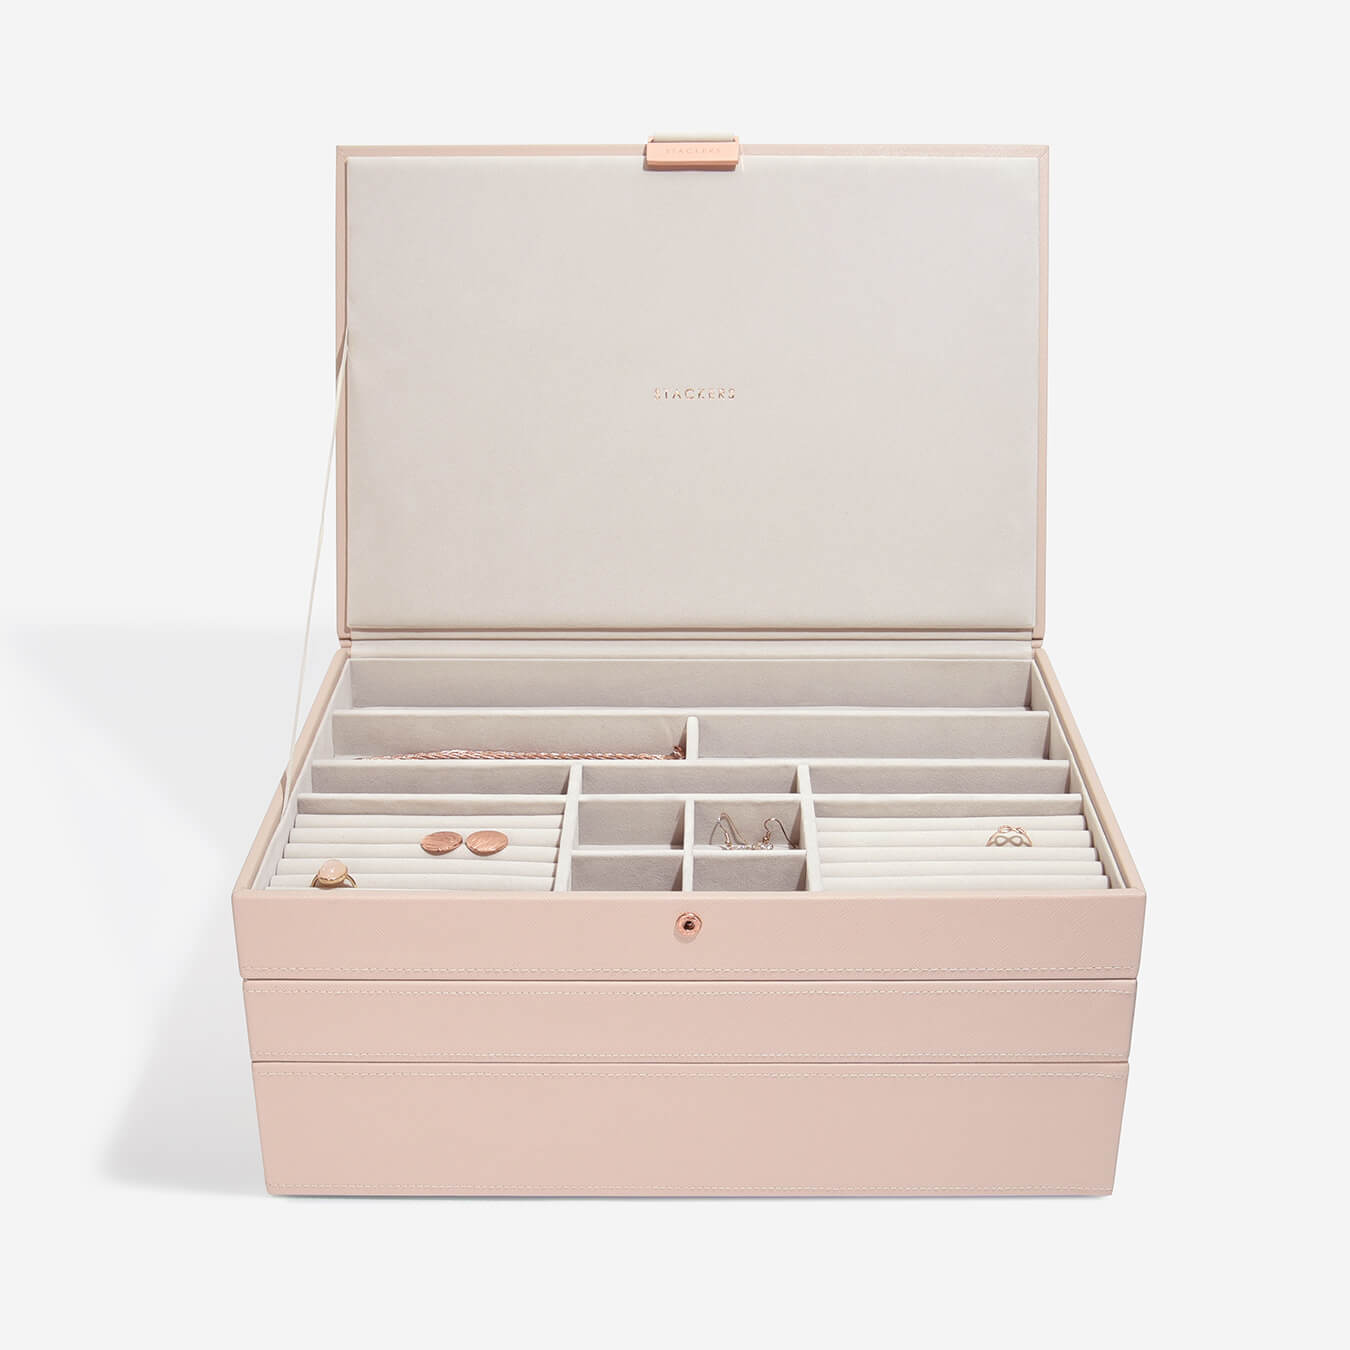 Stackers Canada Supersize Set of 3 Jewellery Box - Blush Pink